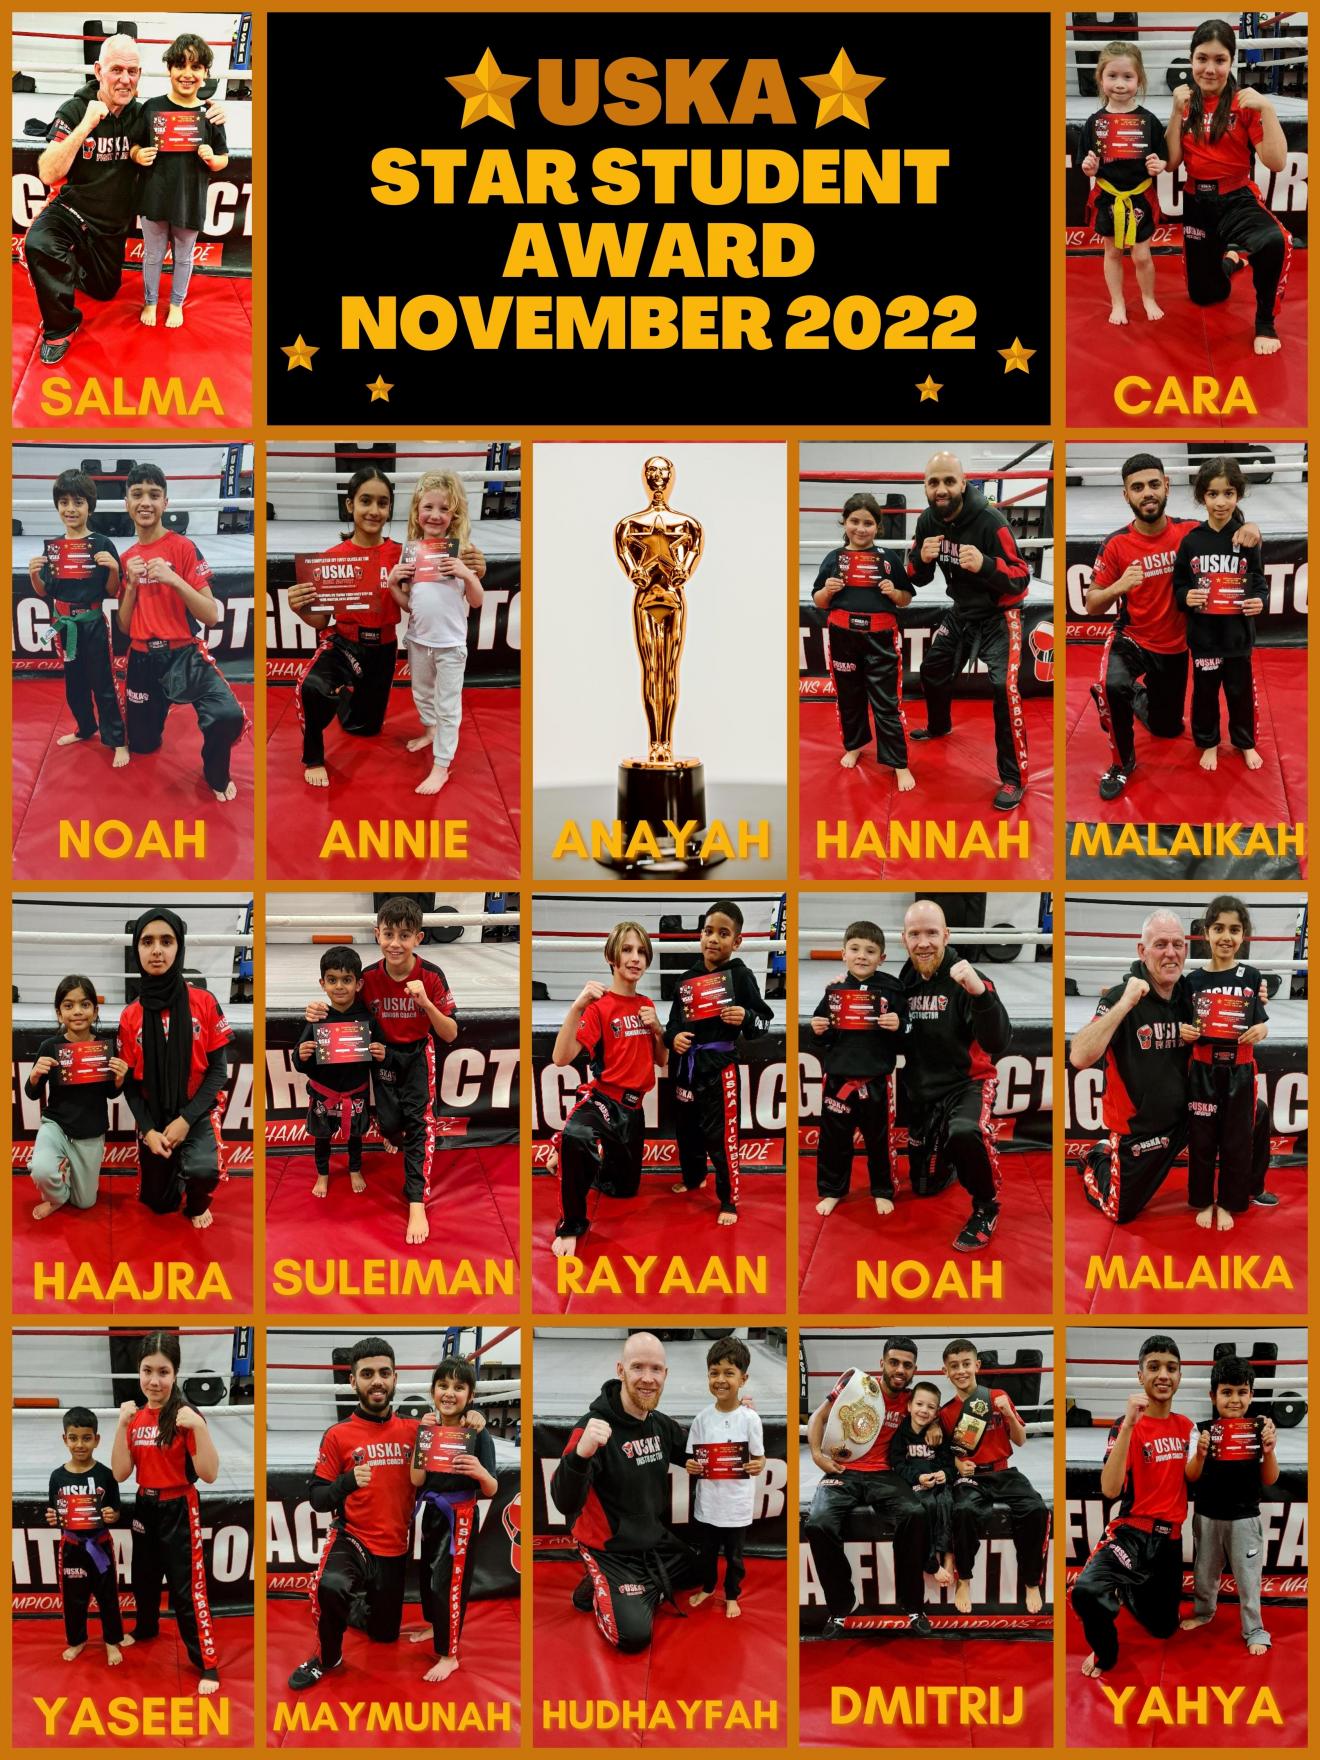 30-11-22 - USKA Star Student Winners - November 2022